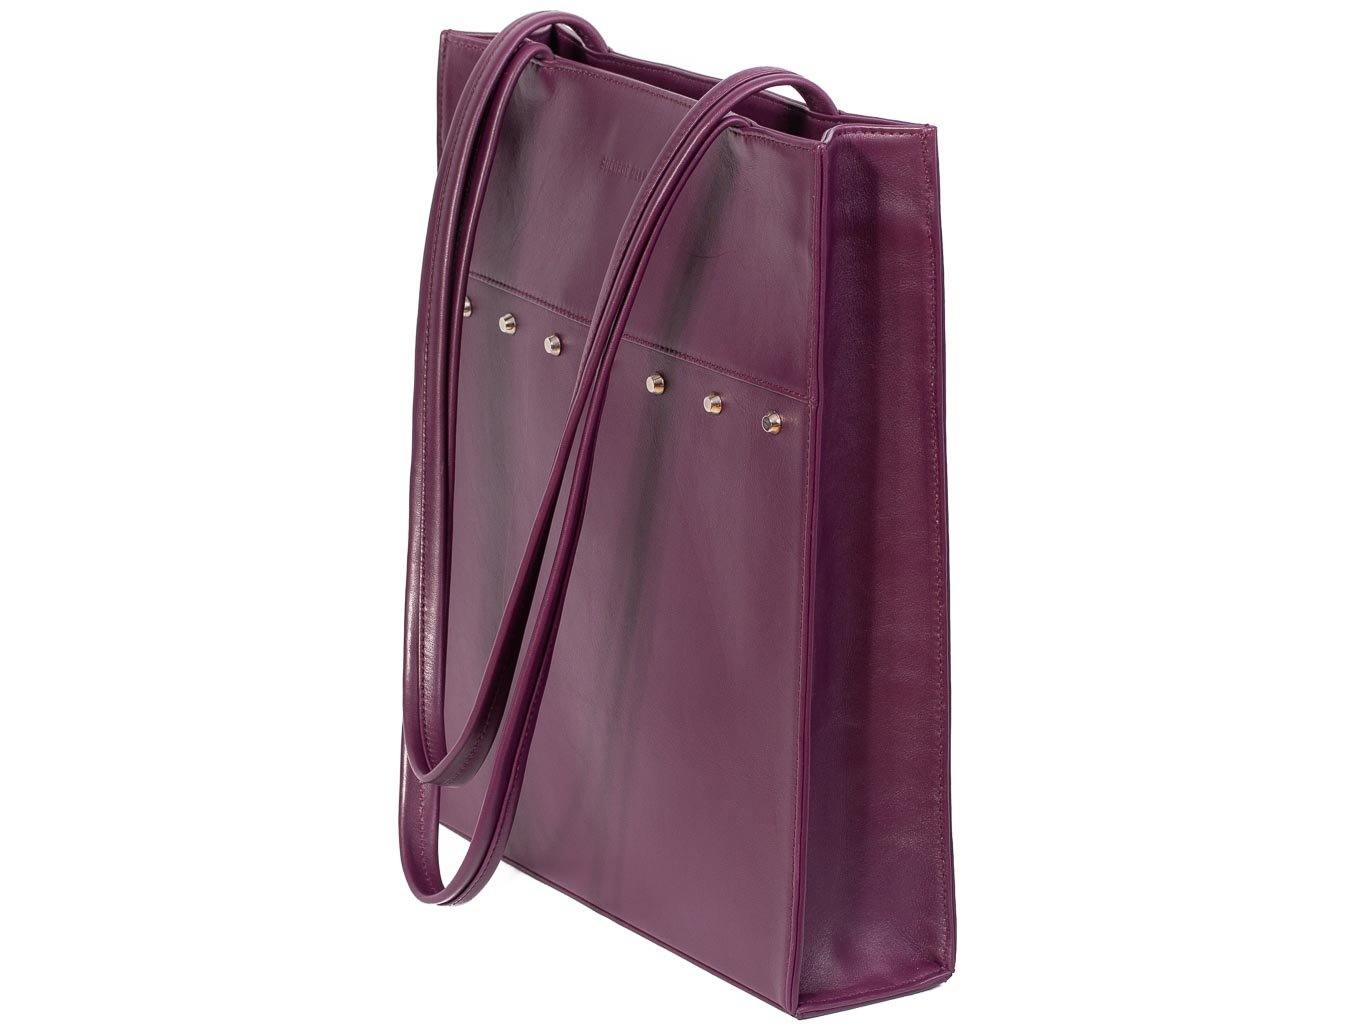 Tote Studded Handbag in Deep Purple by Sherene Melinda side angle strap